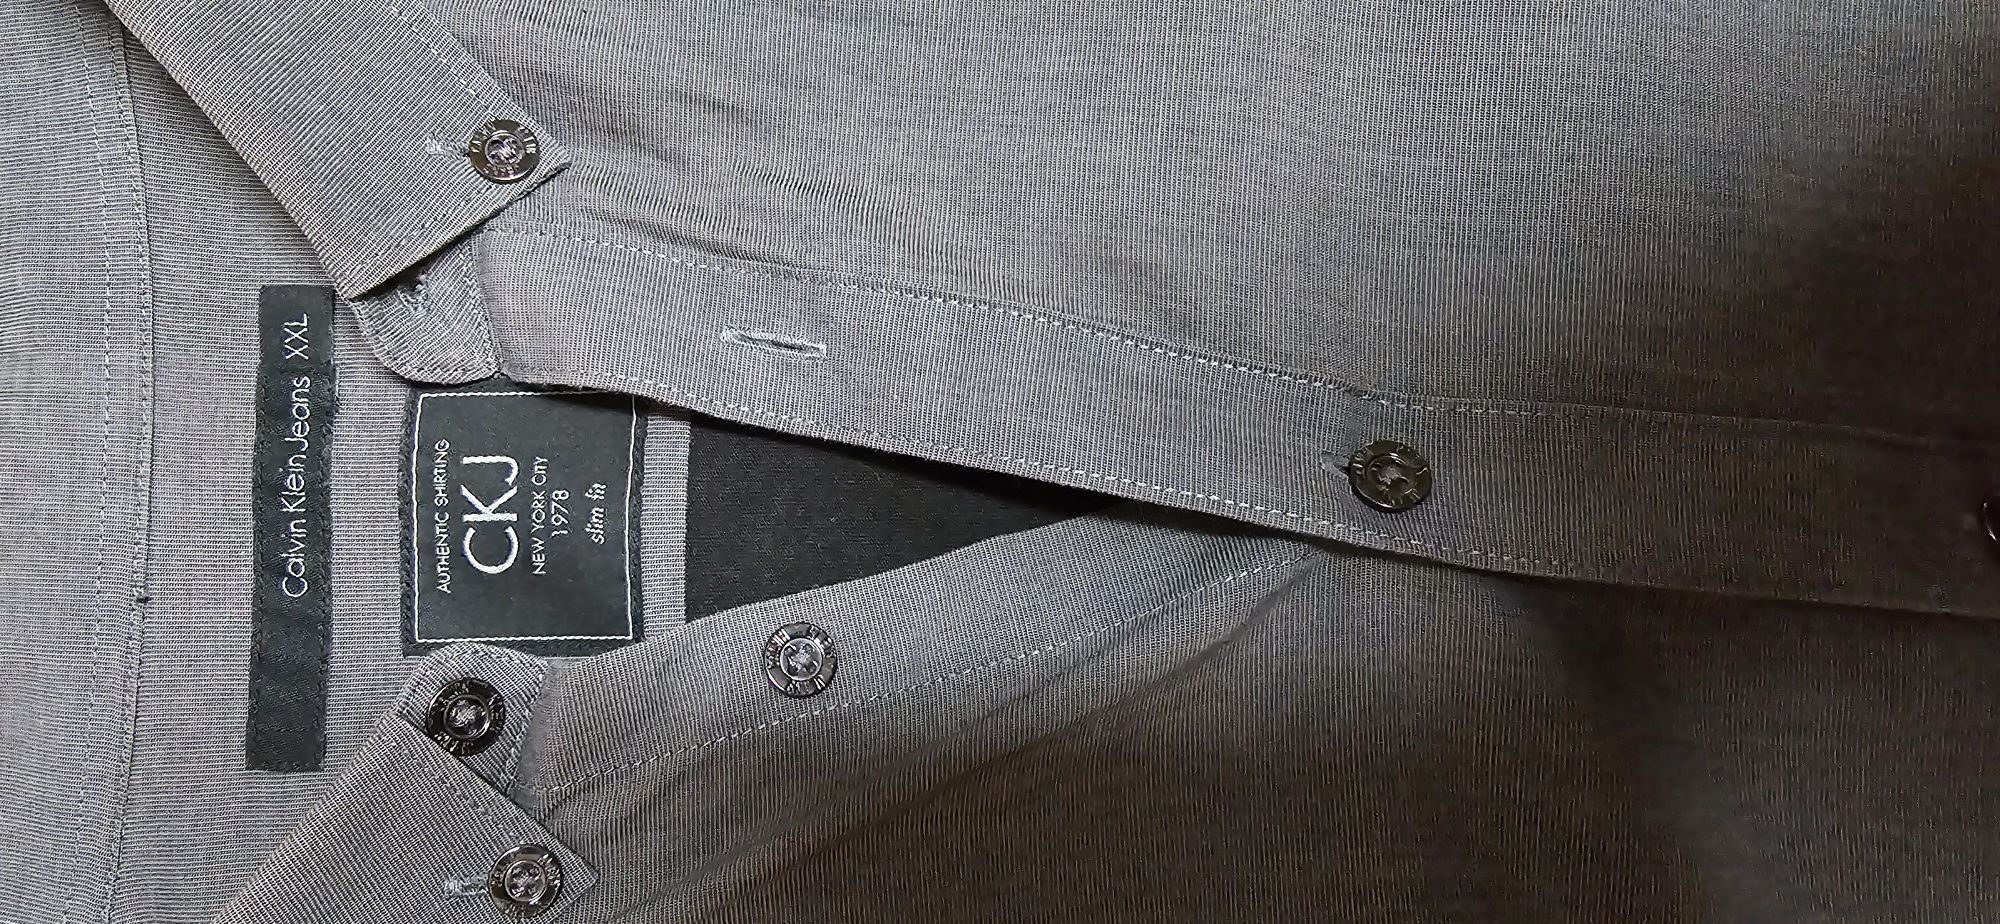 Calvin Klein Jeans koszula + krawat komplet r. xxl.